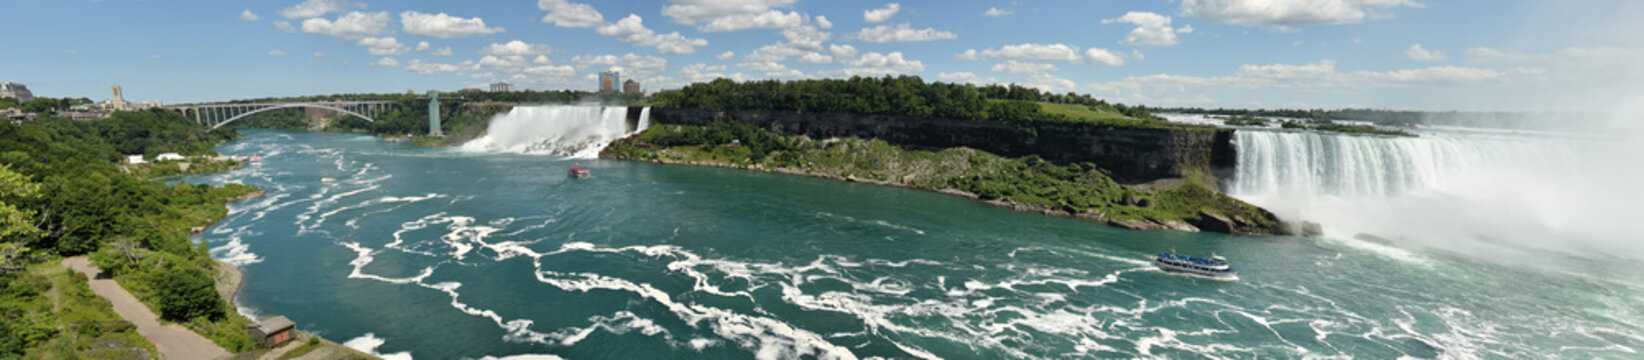 Niagara Falls panoramic view